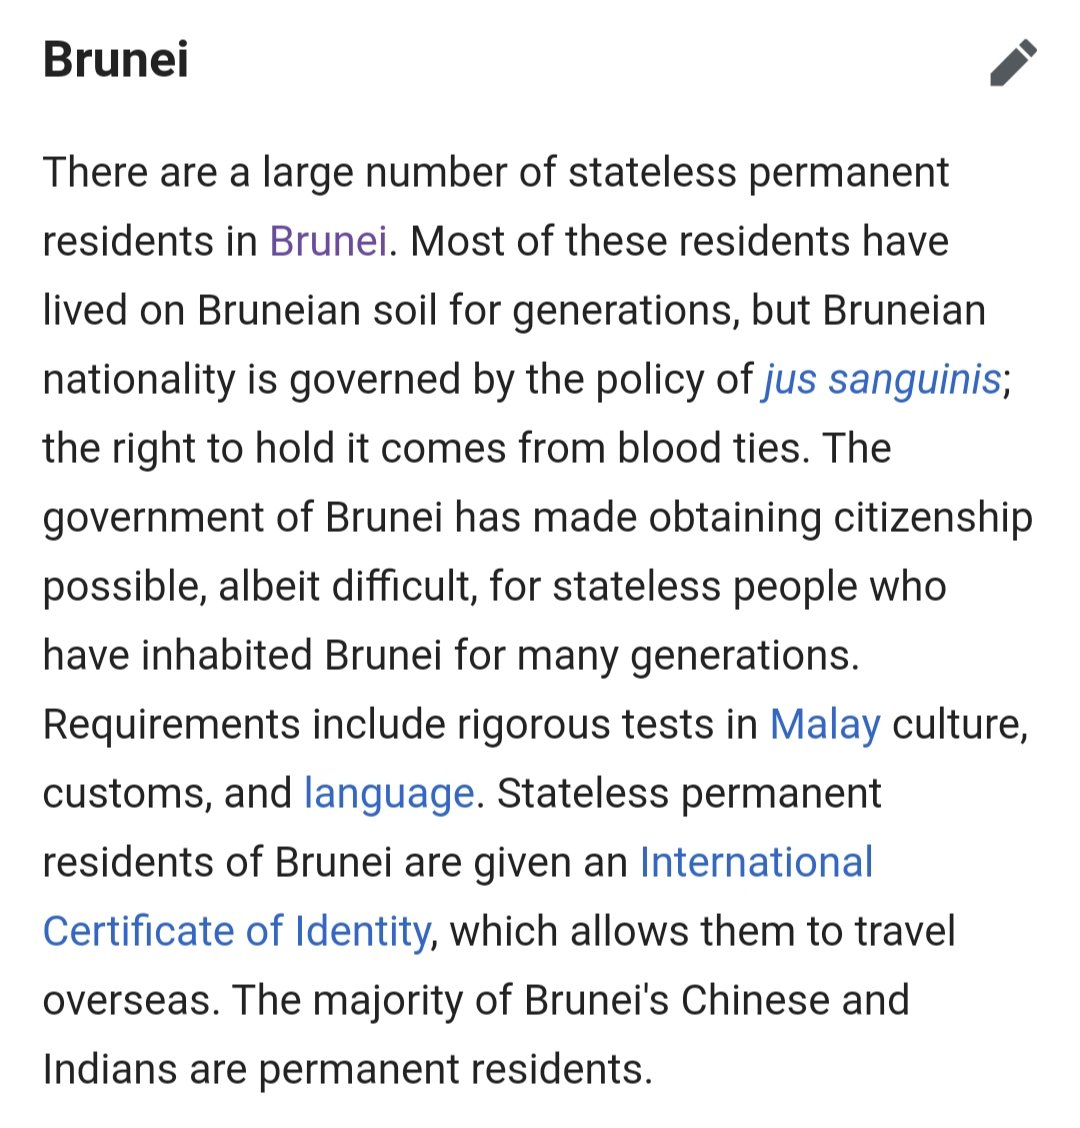 Status mereka hanya "Permanent Resident" dan bukan Warga Negara Brunei.  https://en.m.wikipedia.org/wiki/Statelessness#Brunei